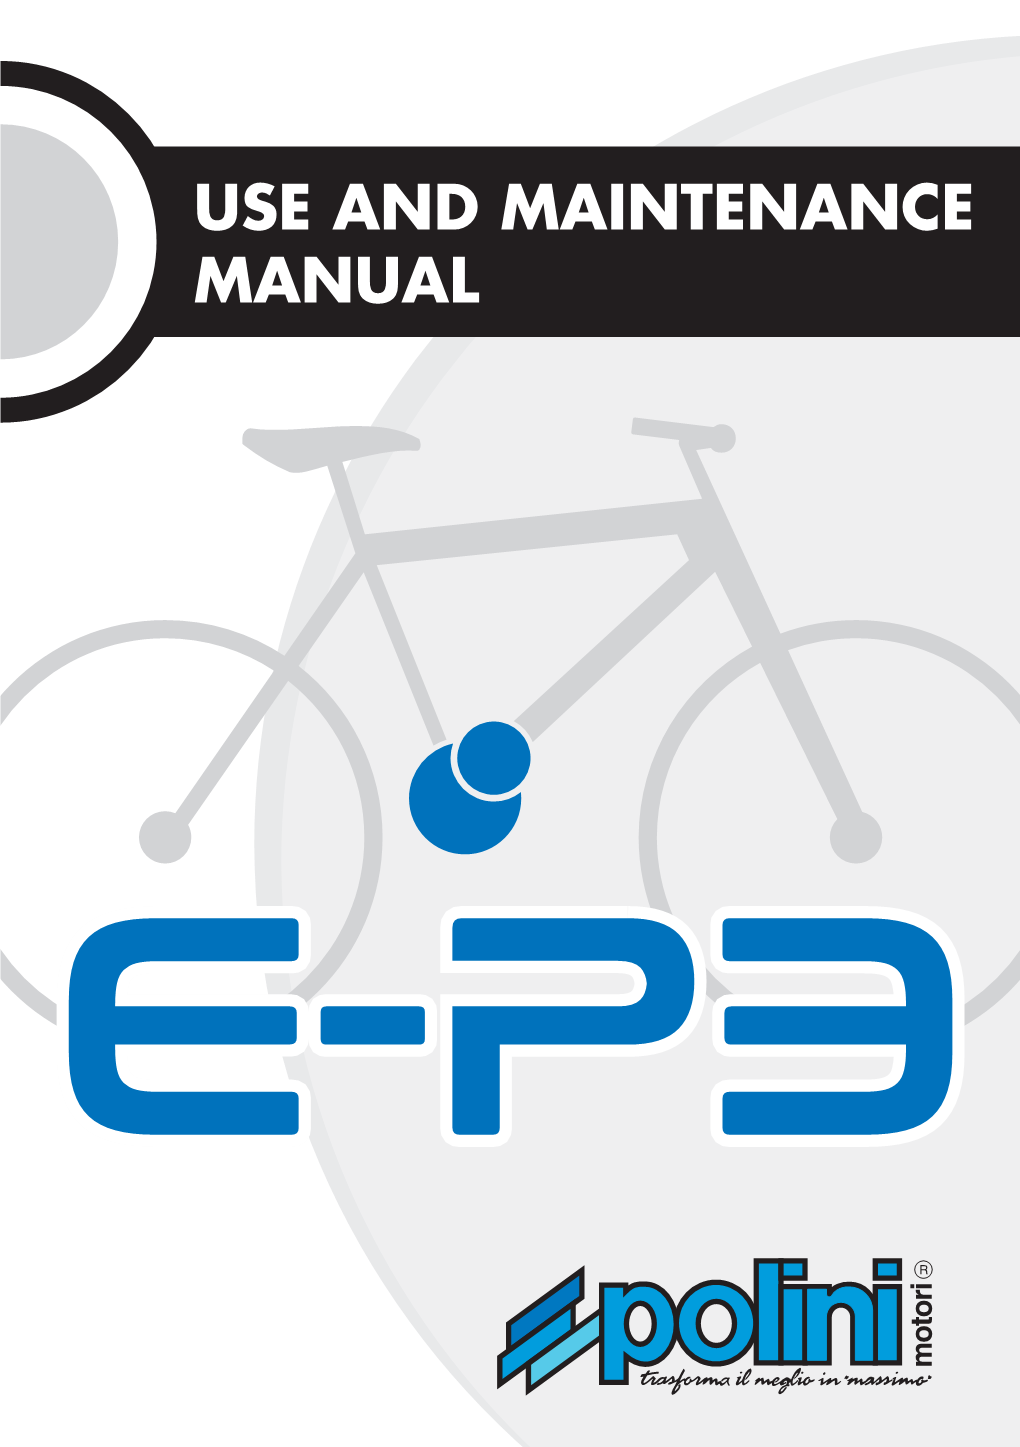 Use and Maintenance Manual 2